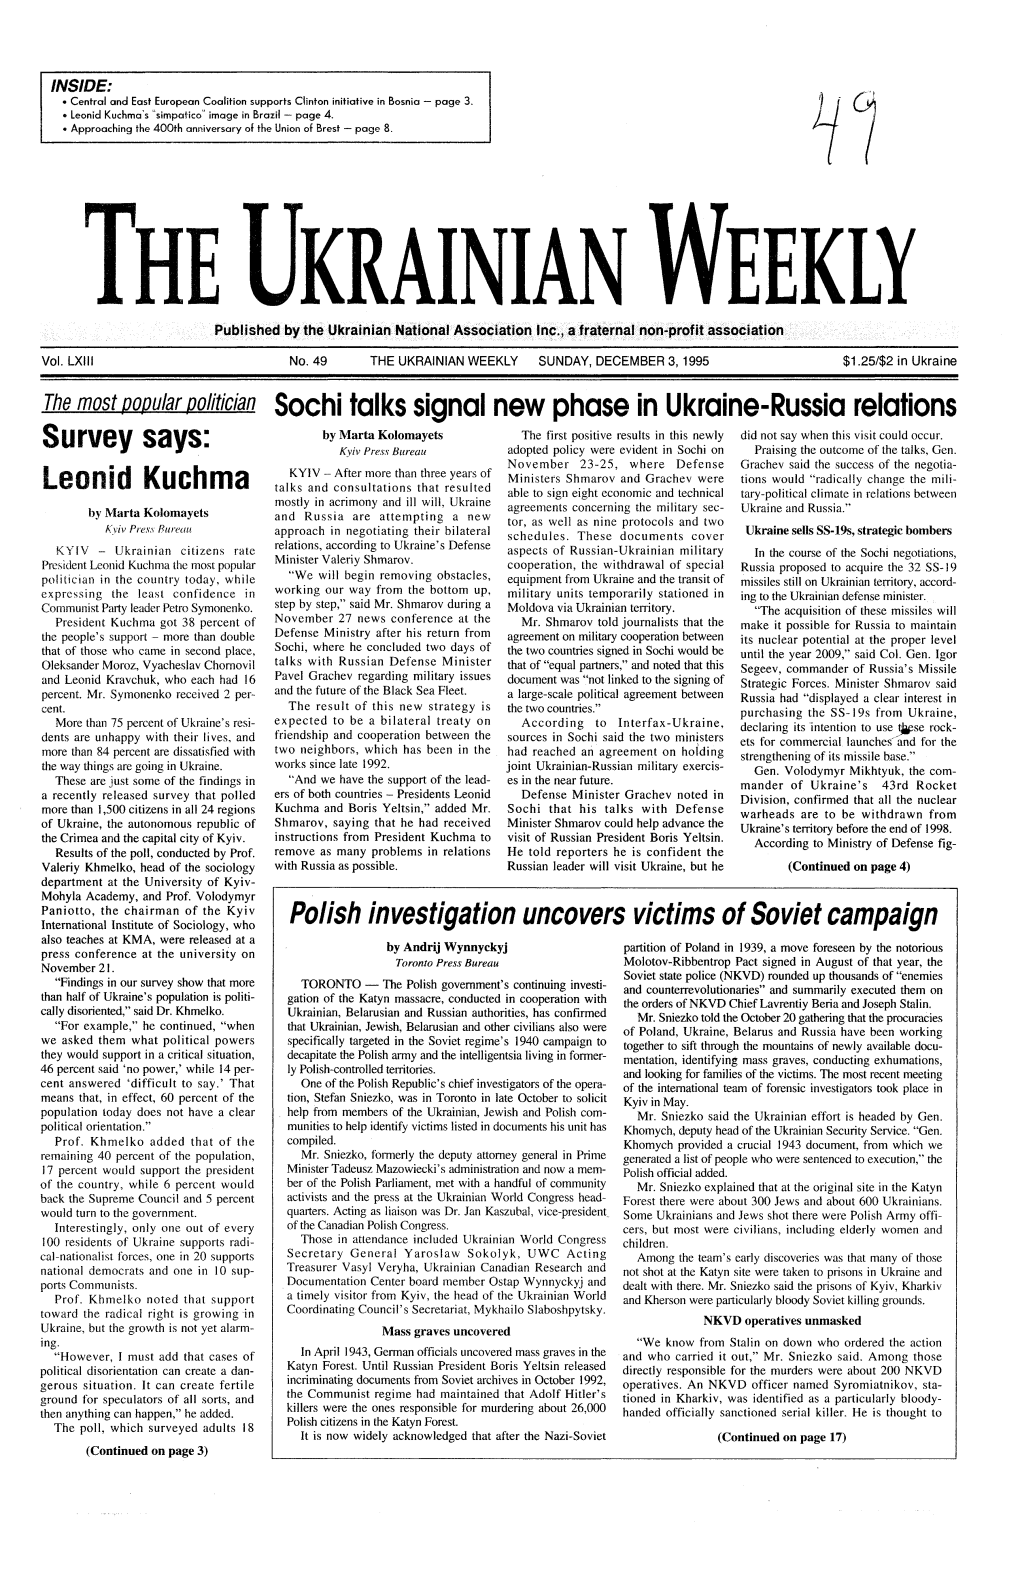 The Ukrainian Weekly 1995, No.49